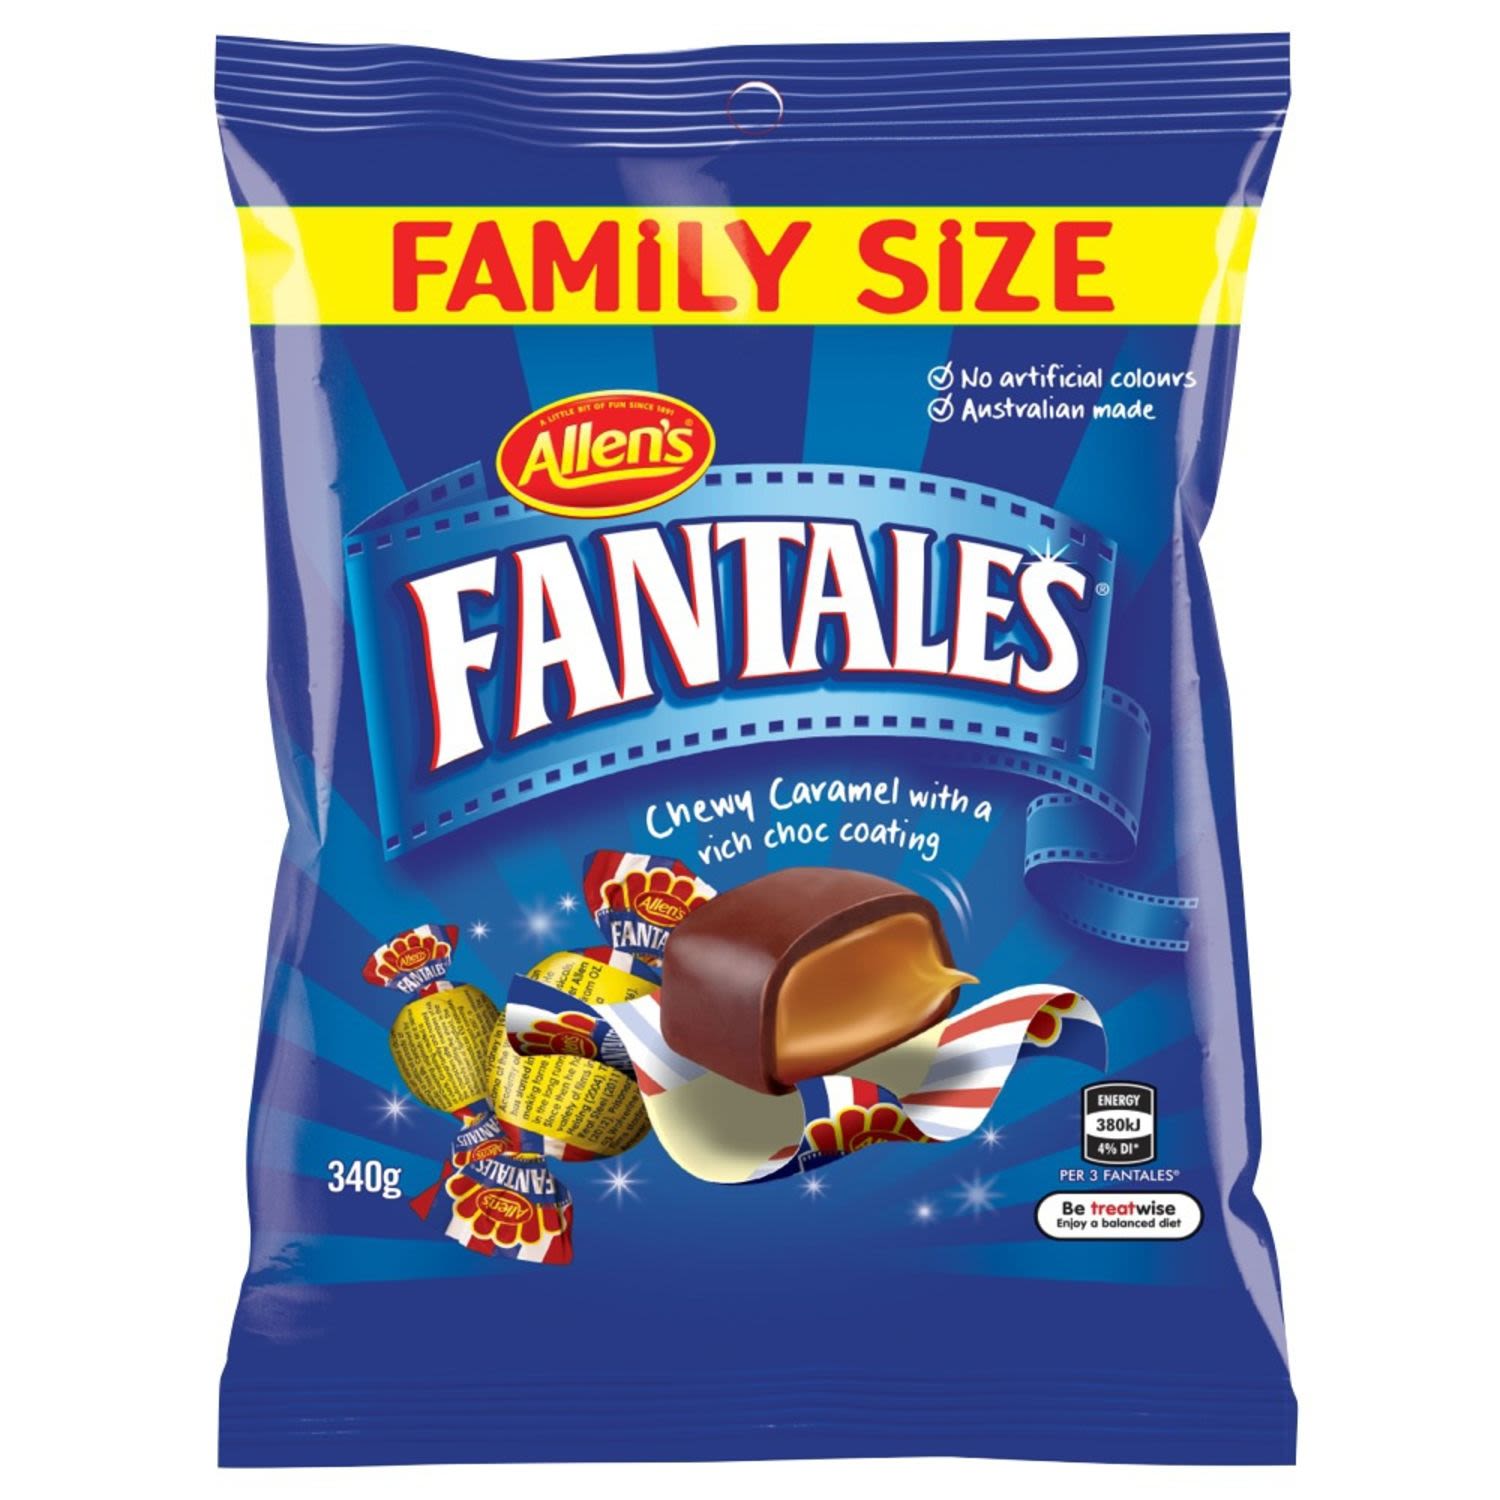 Allen's Fantales Family Size, 340 Gram